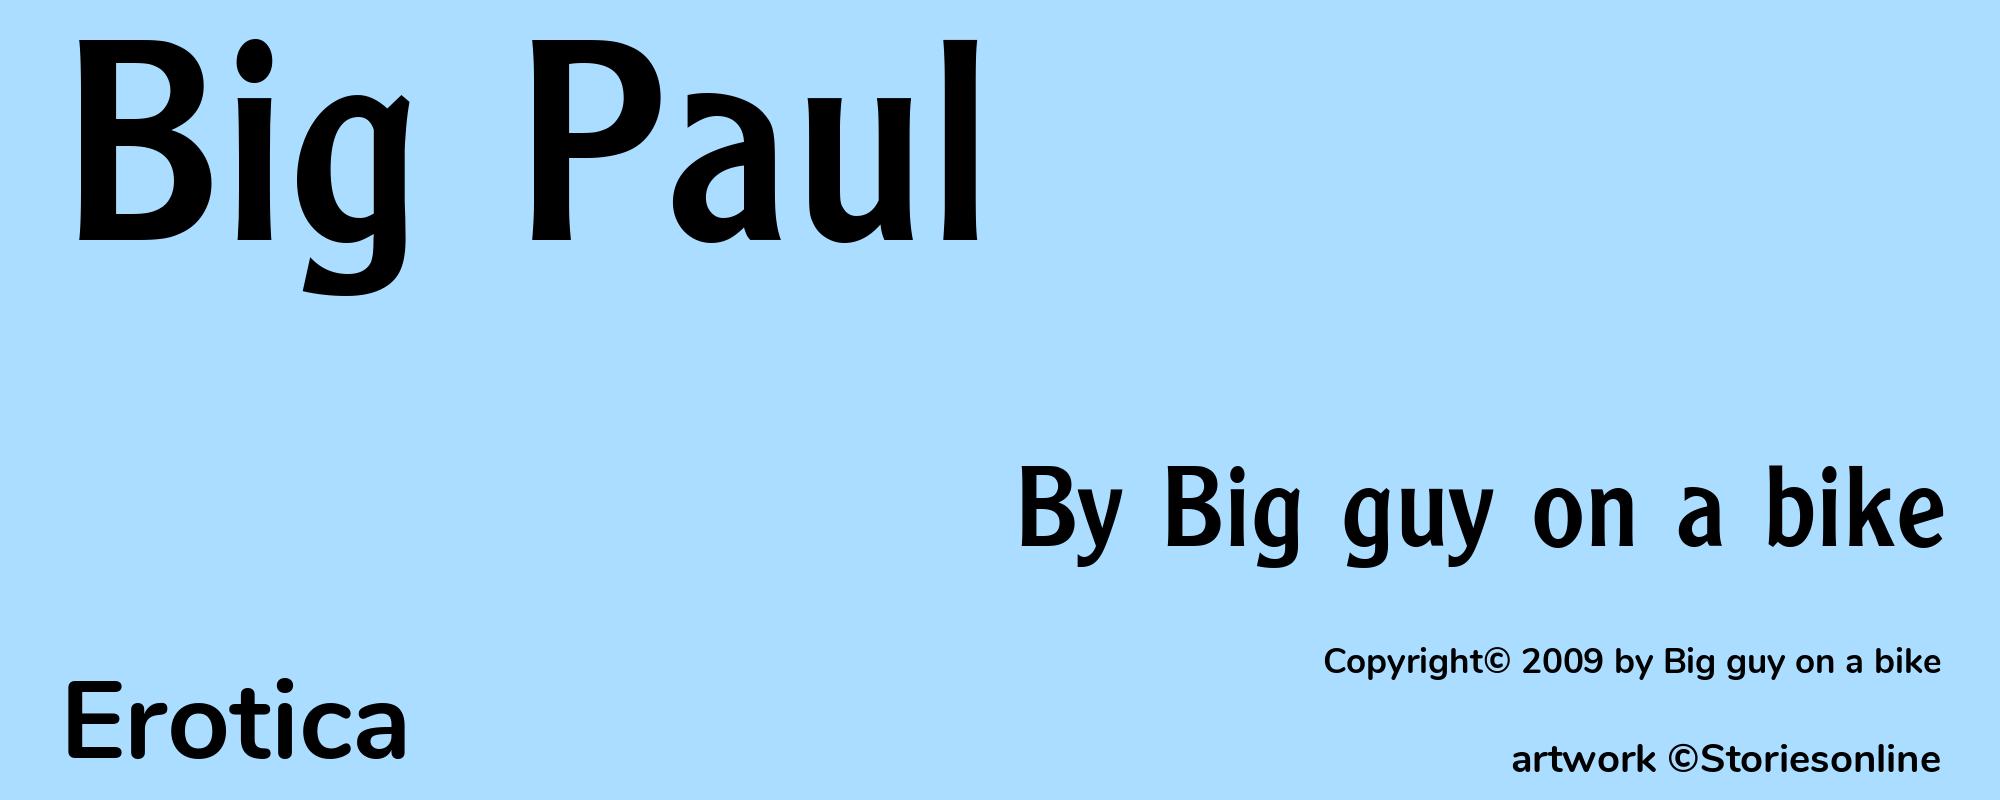 Big Paul - Cover